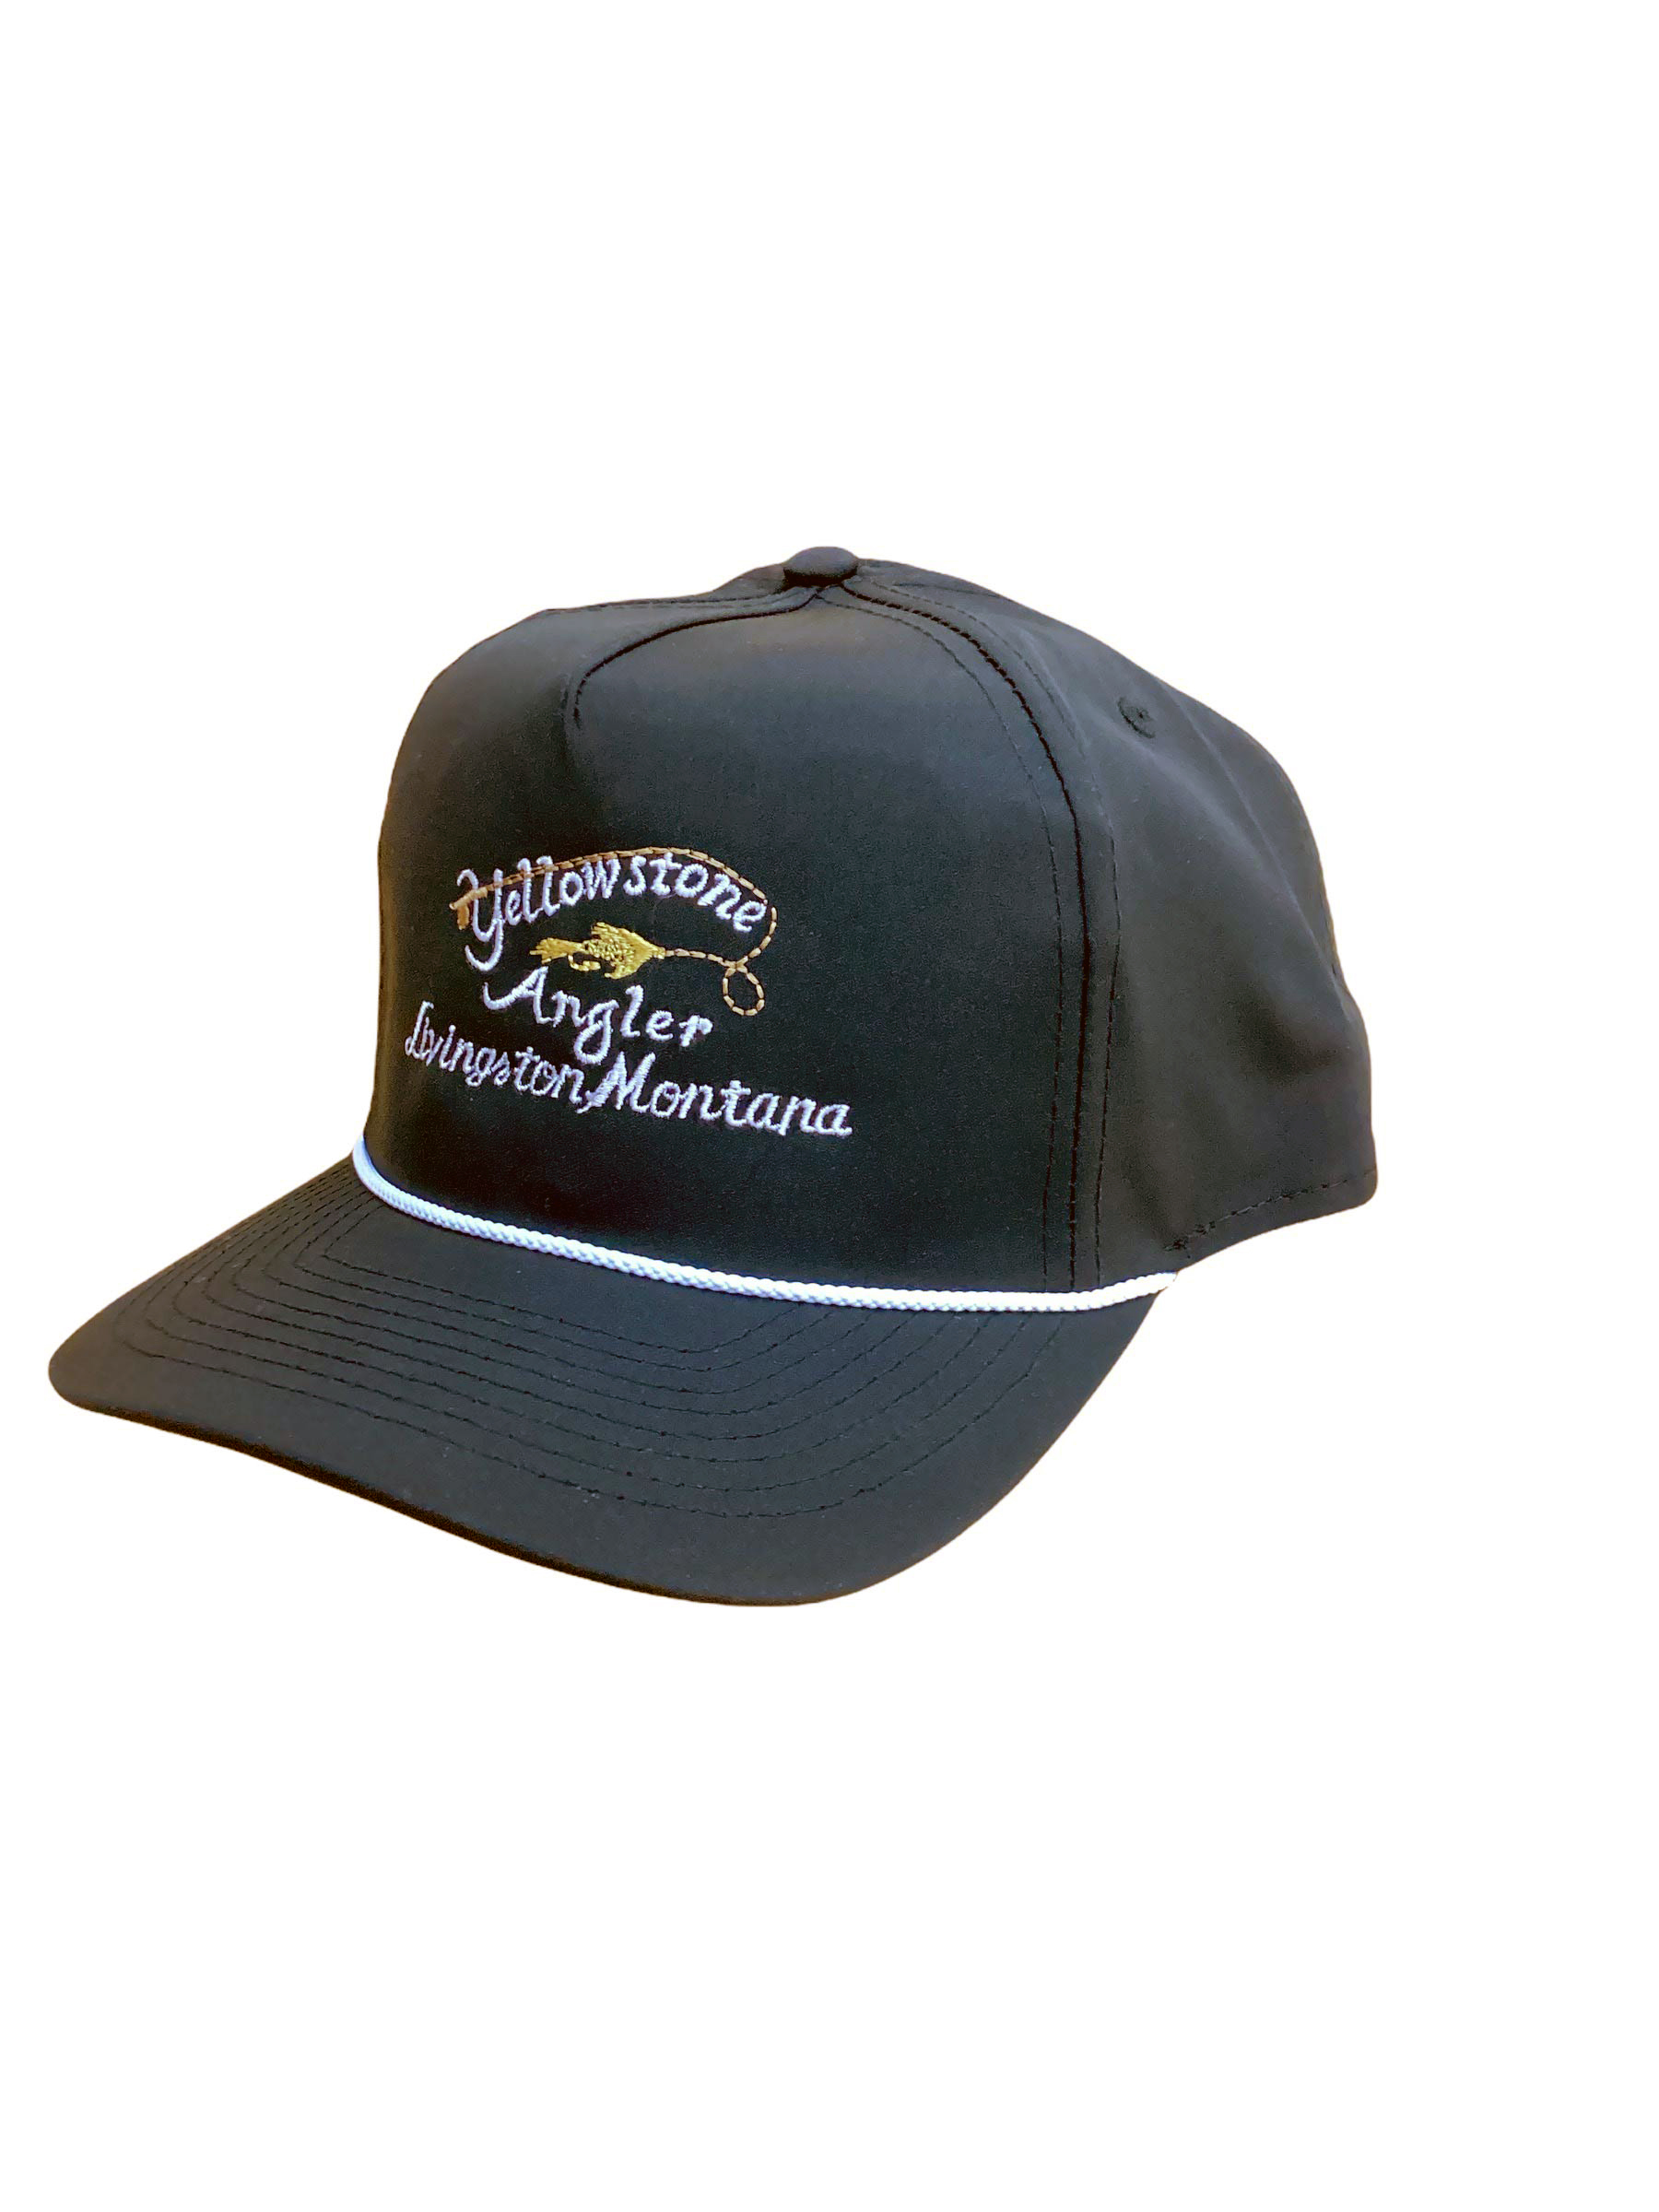 Yellowstone Angler Original Logo Hat (Color: Charcoal/Stone)